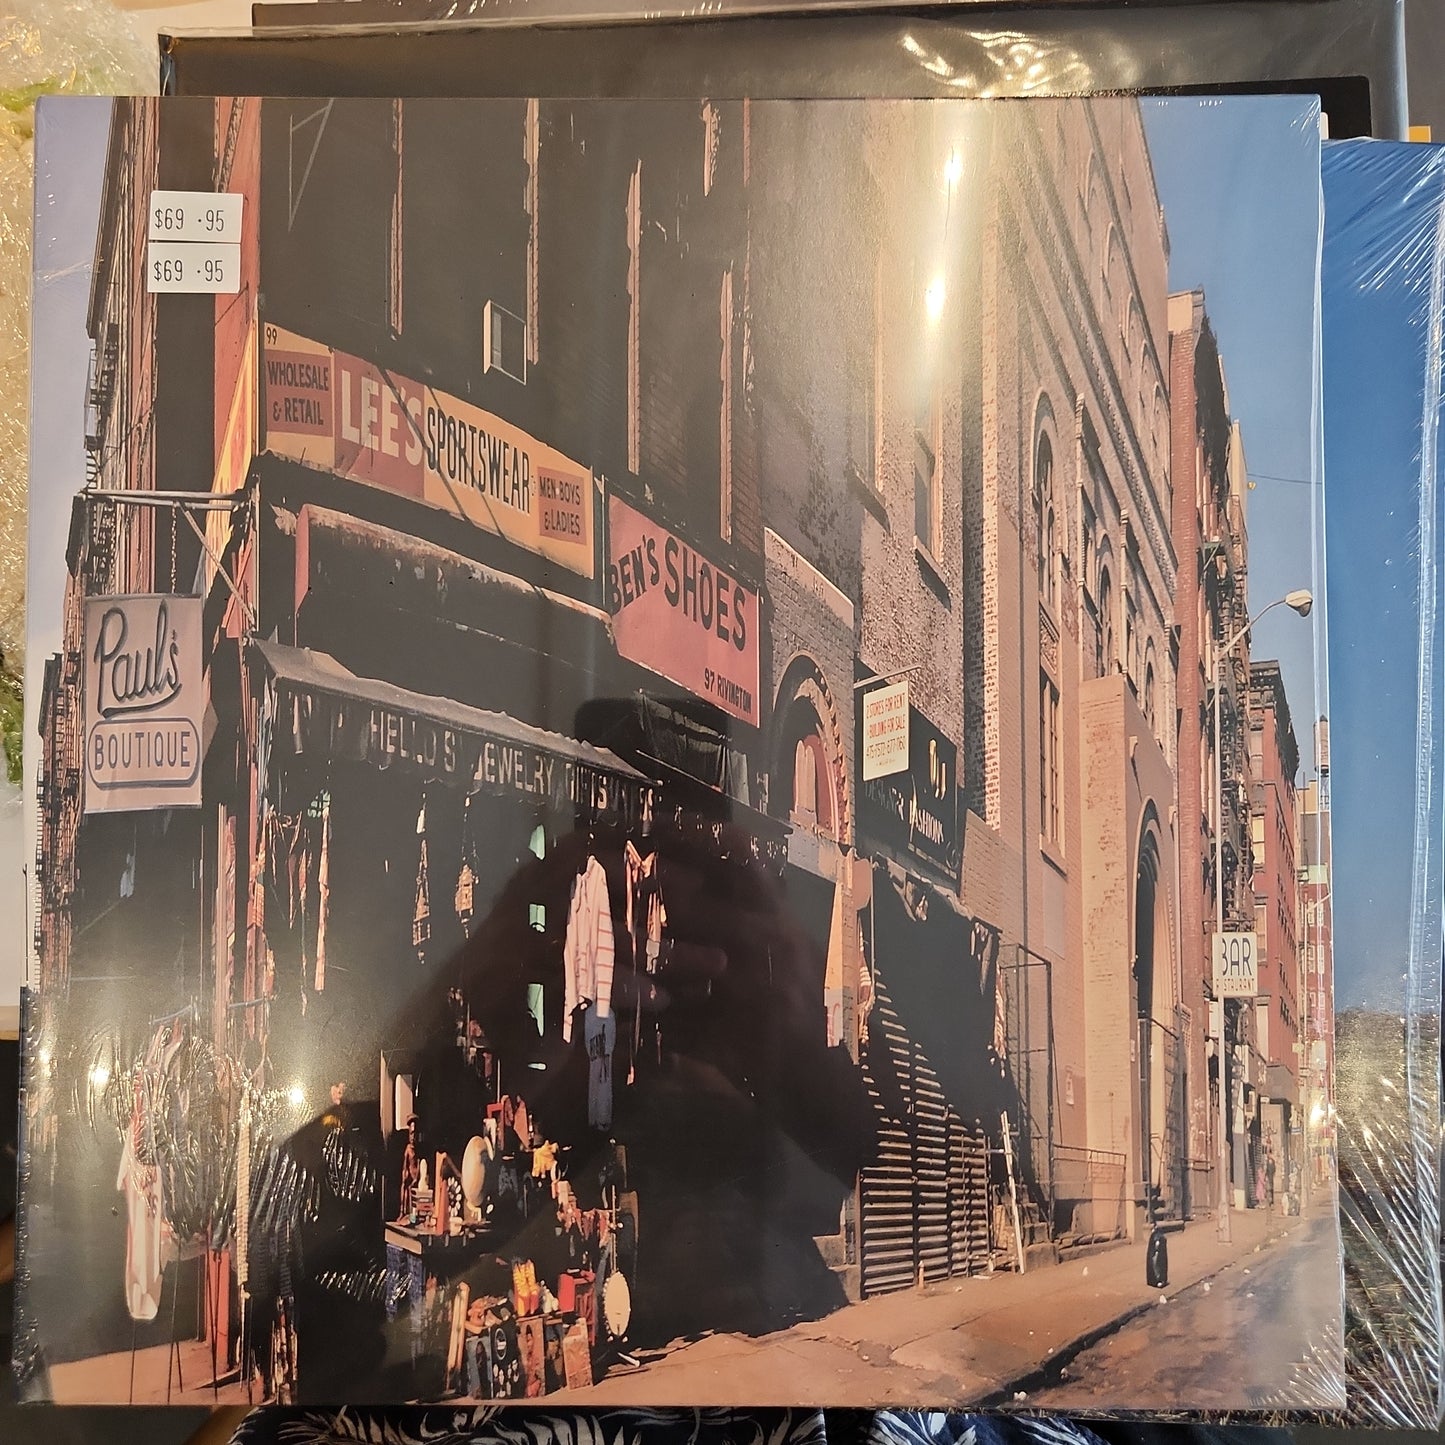 Beastie Boys - Pauls Boutique - Vinyl LP